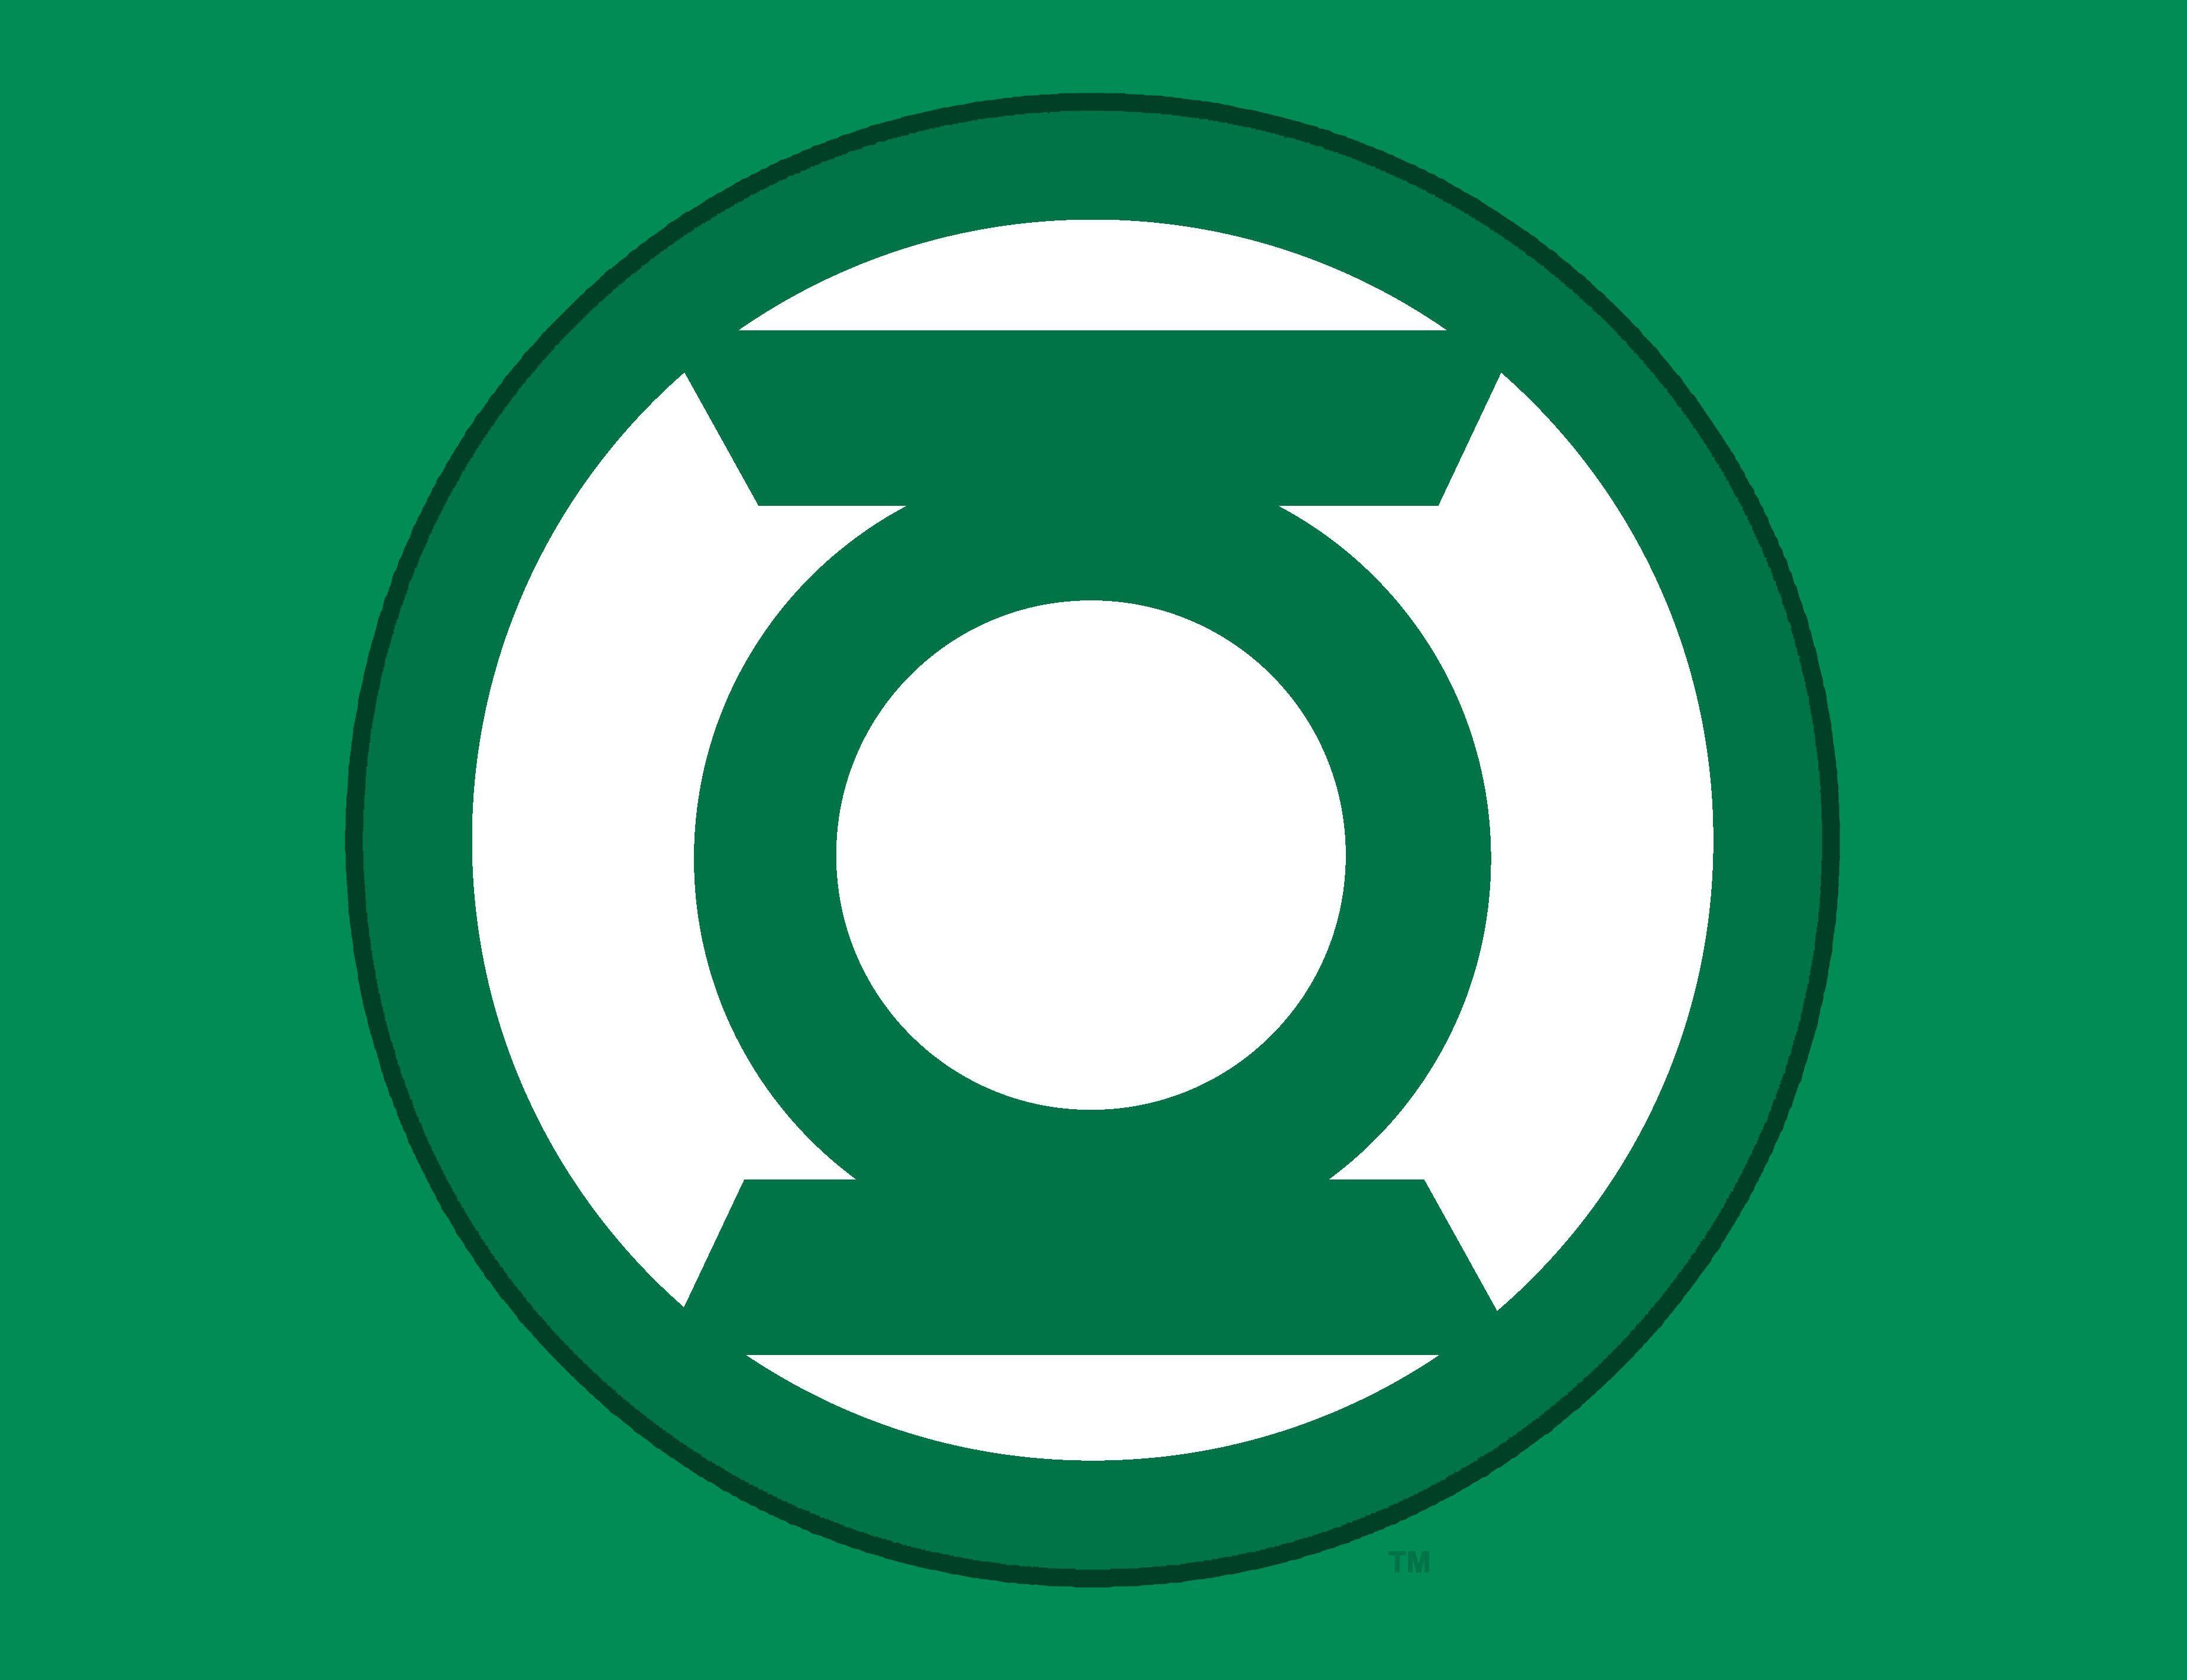 Most Popular Green Logo - Green Lantern Logo, Green Lantern Symbol, Meaning, History and Evolution